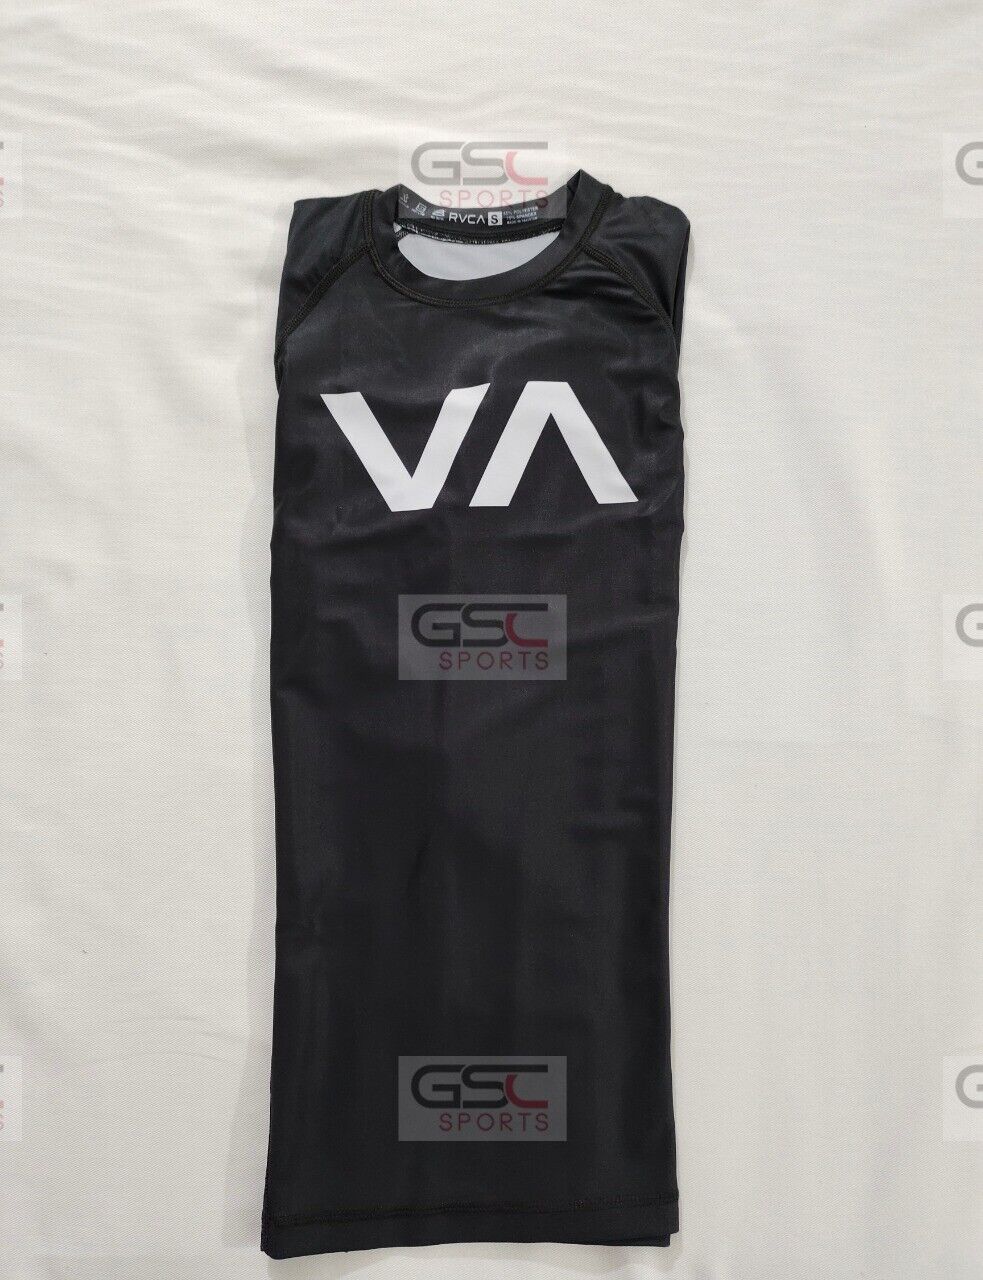 RVCA VA Rush Guard Bjj Compression Shirt XL Size With Tag Card Brand New Shoyoroll batch 60 - фотография #10